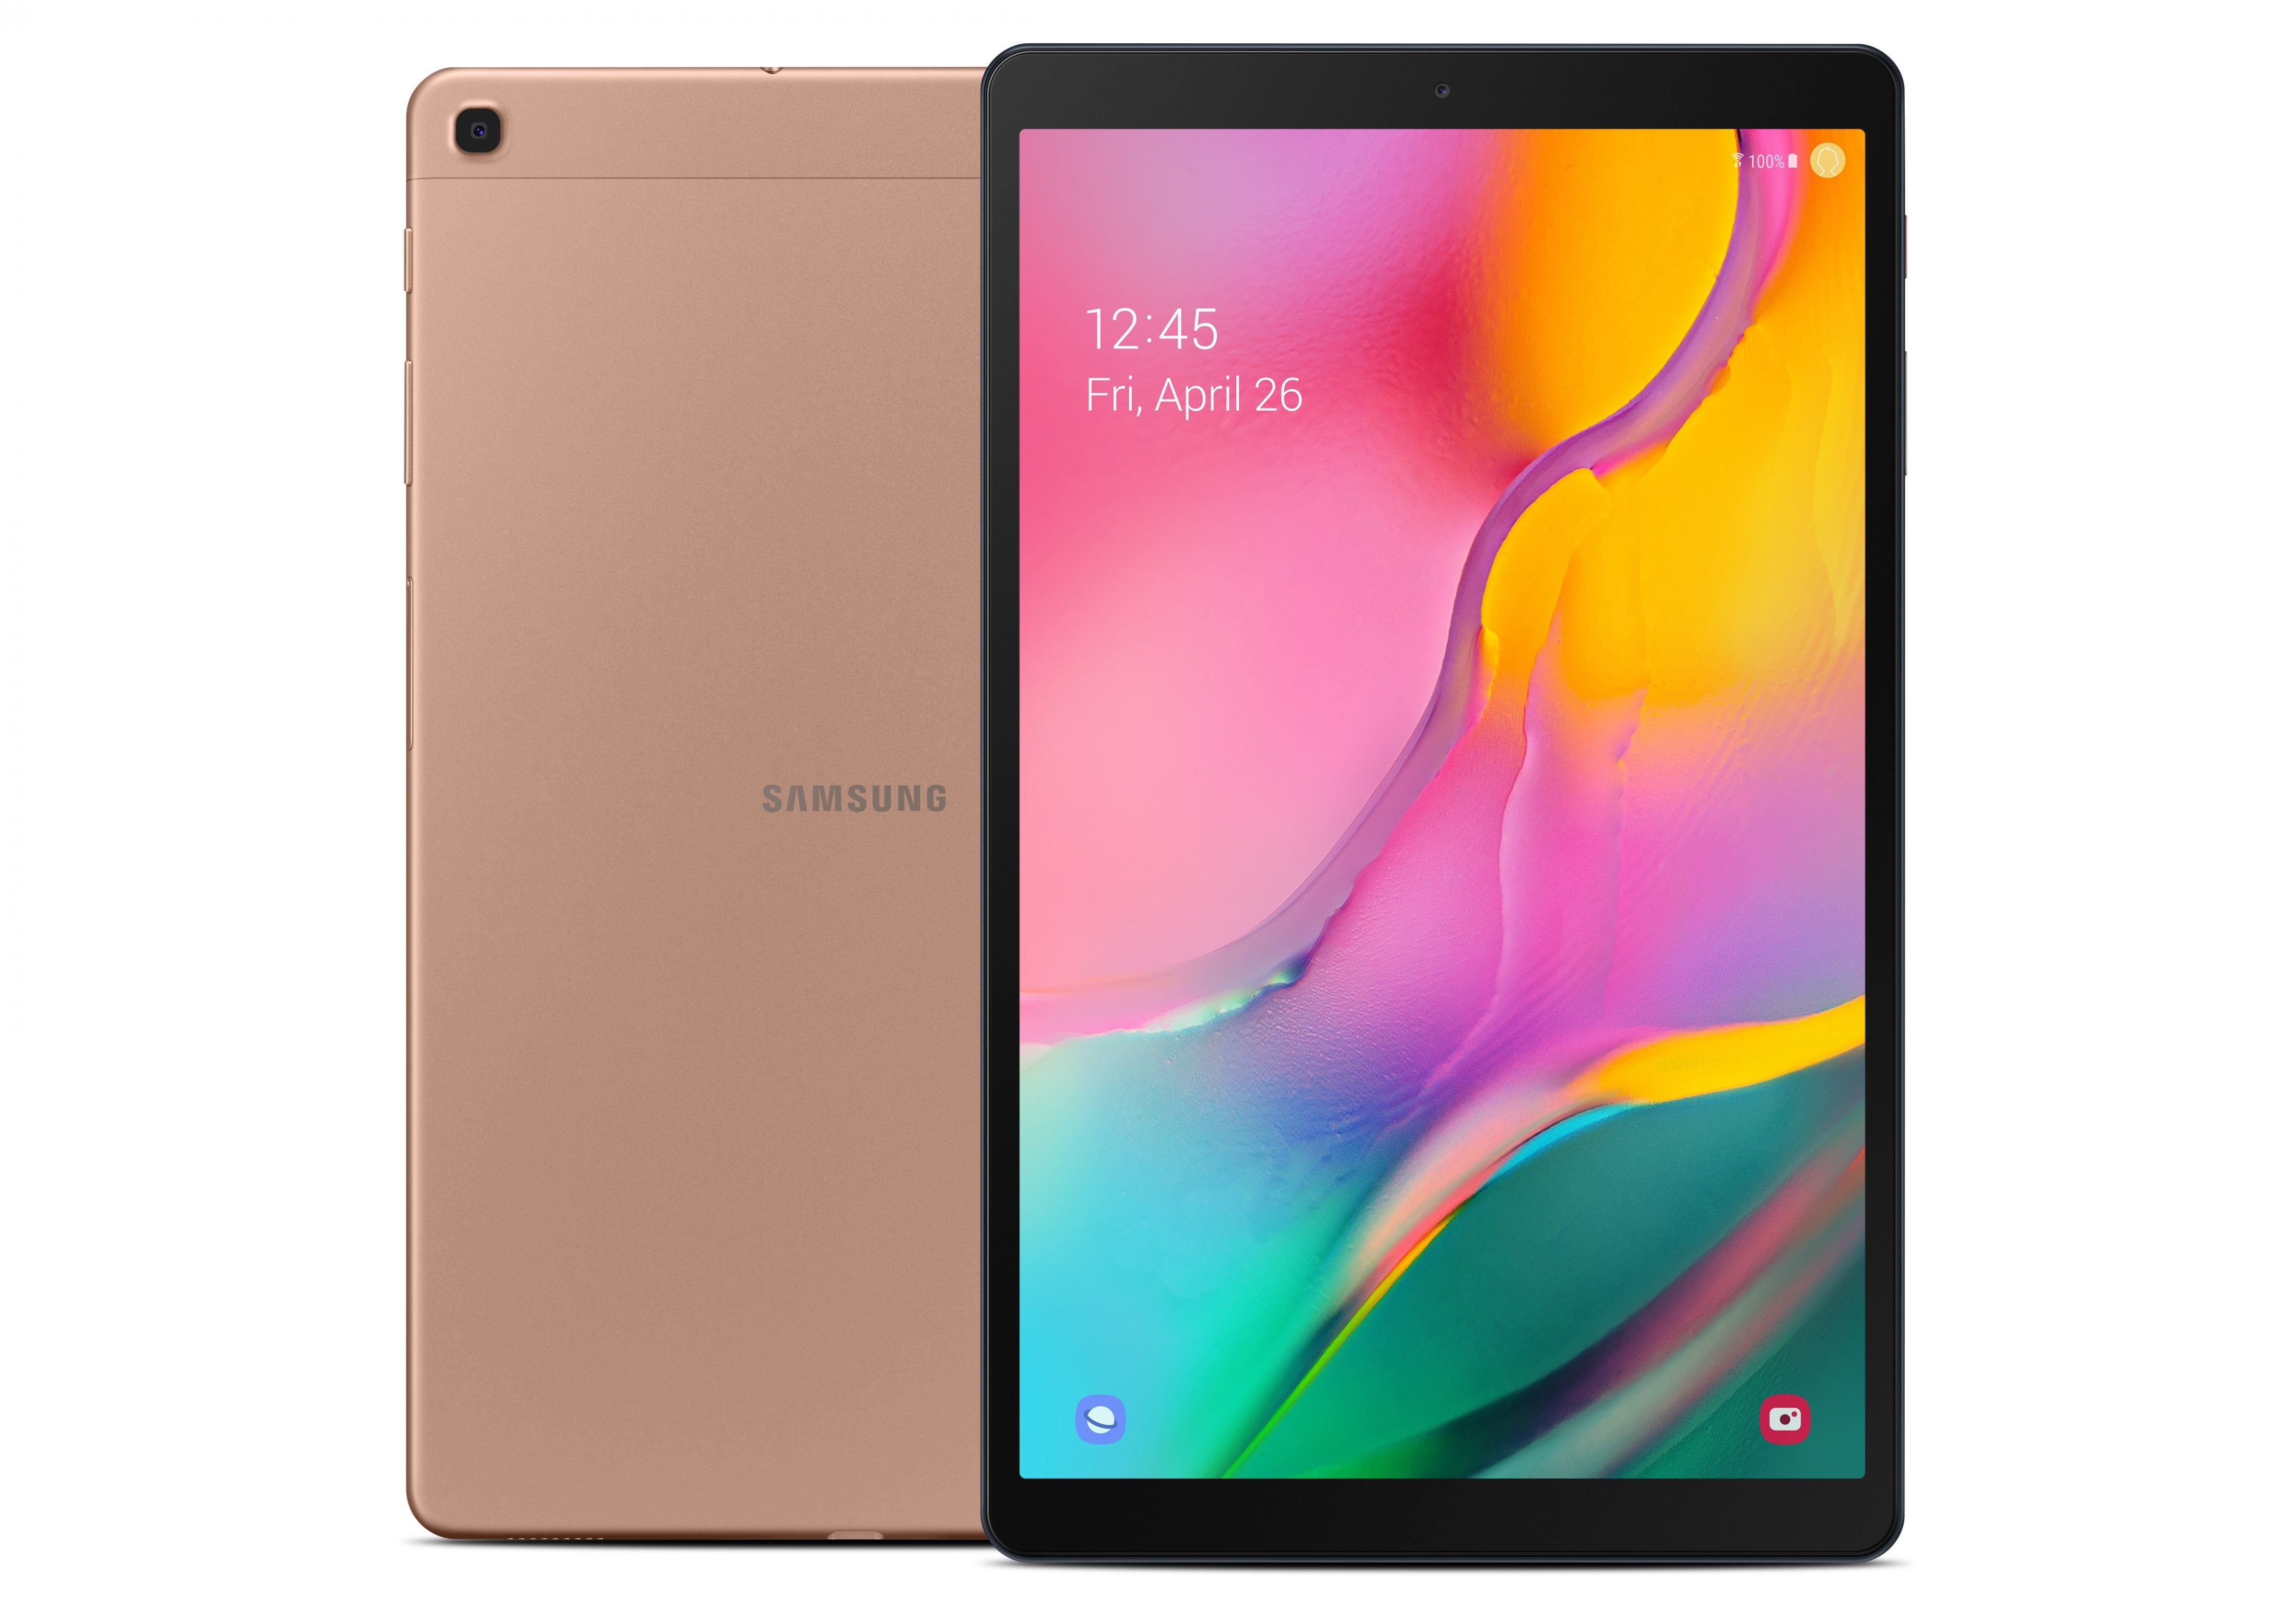 Samsung Galaxy Tab S5e 10.5 (2019) Wi-Fi (SM-T720) 64GB Gold Refurbished Pristine